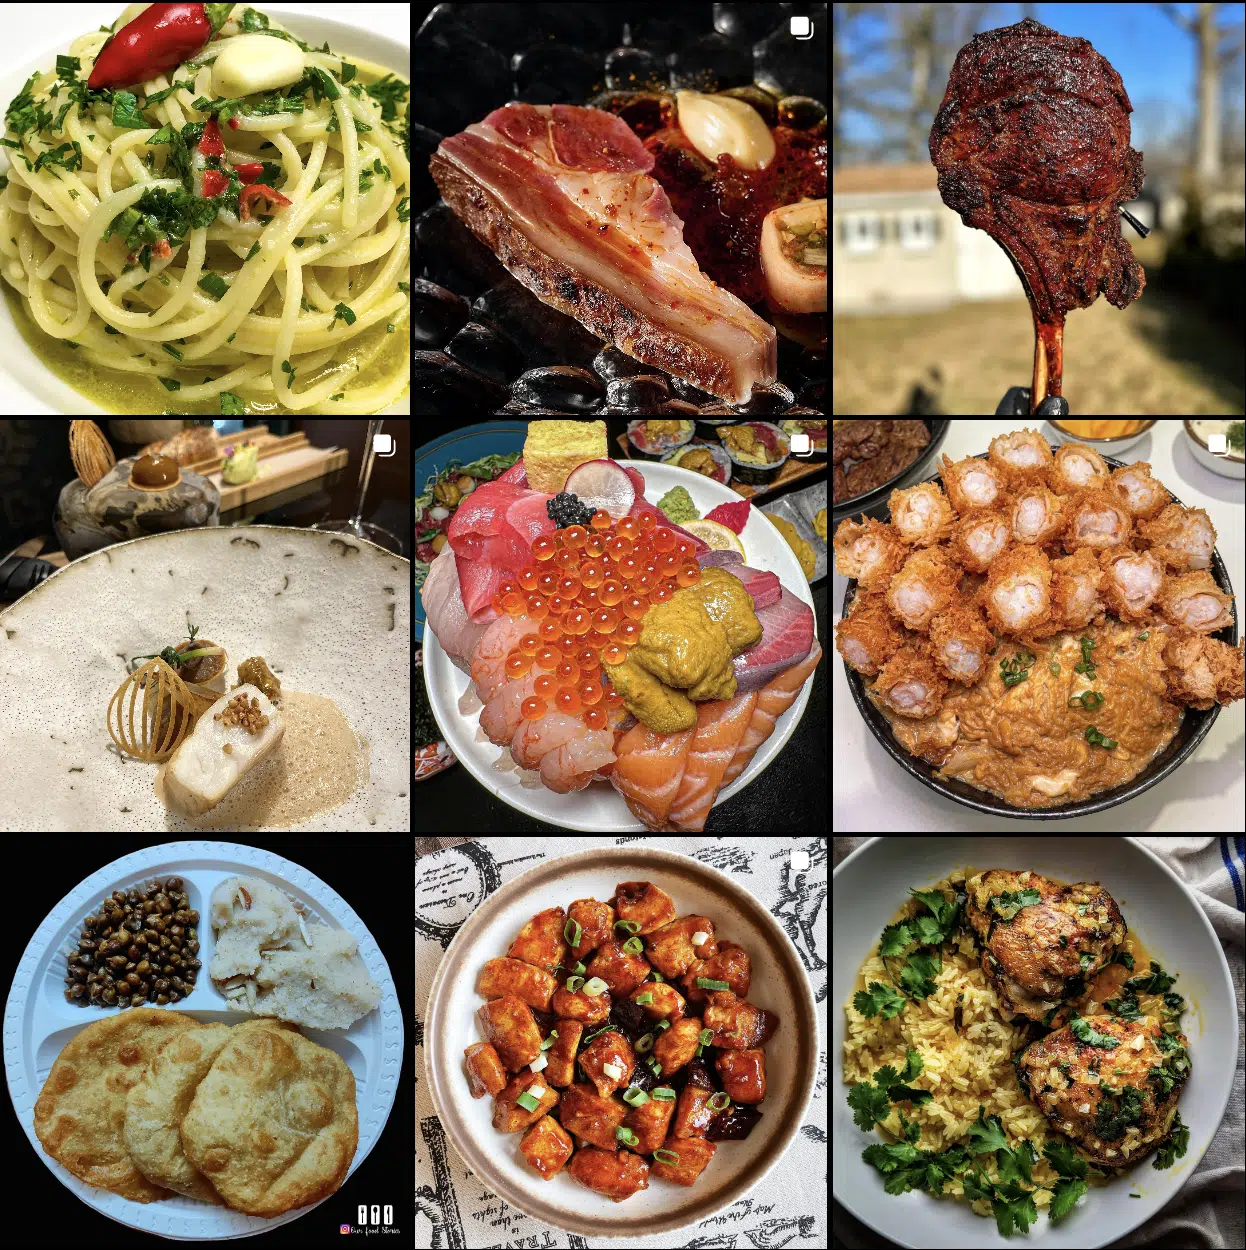 instagram's visual grid displaying local restaurant food